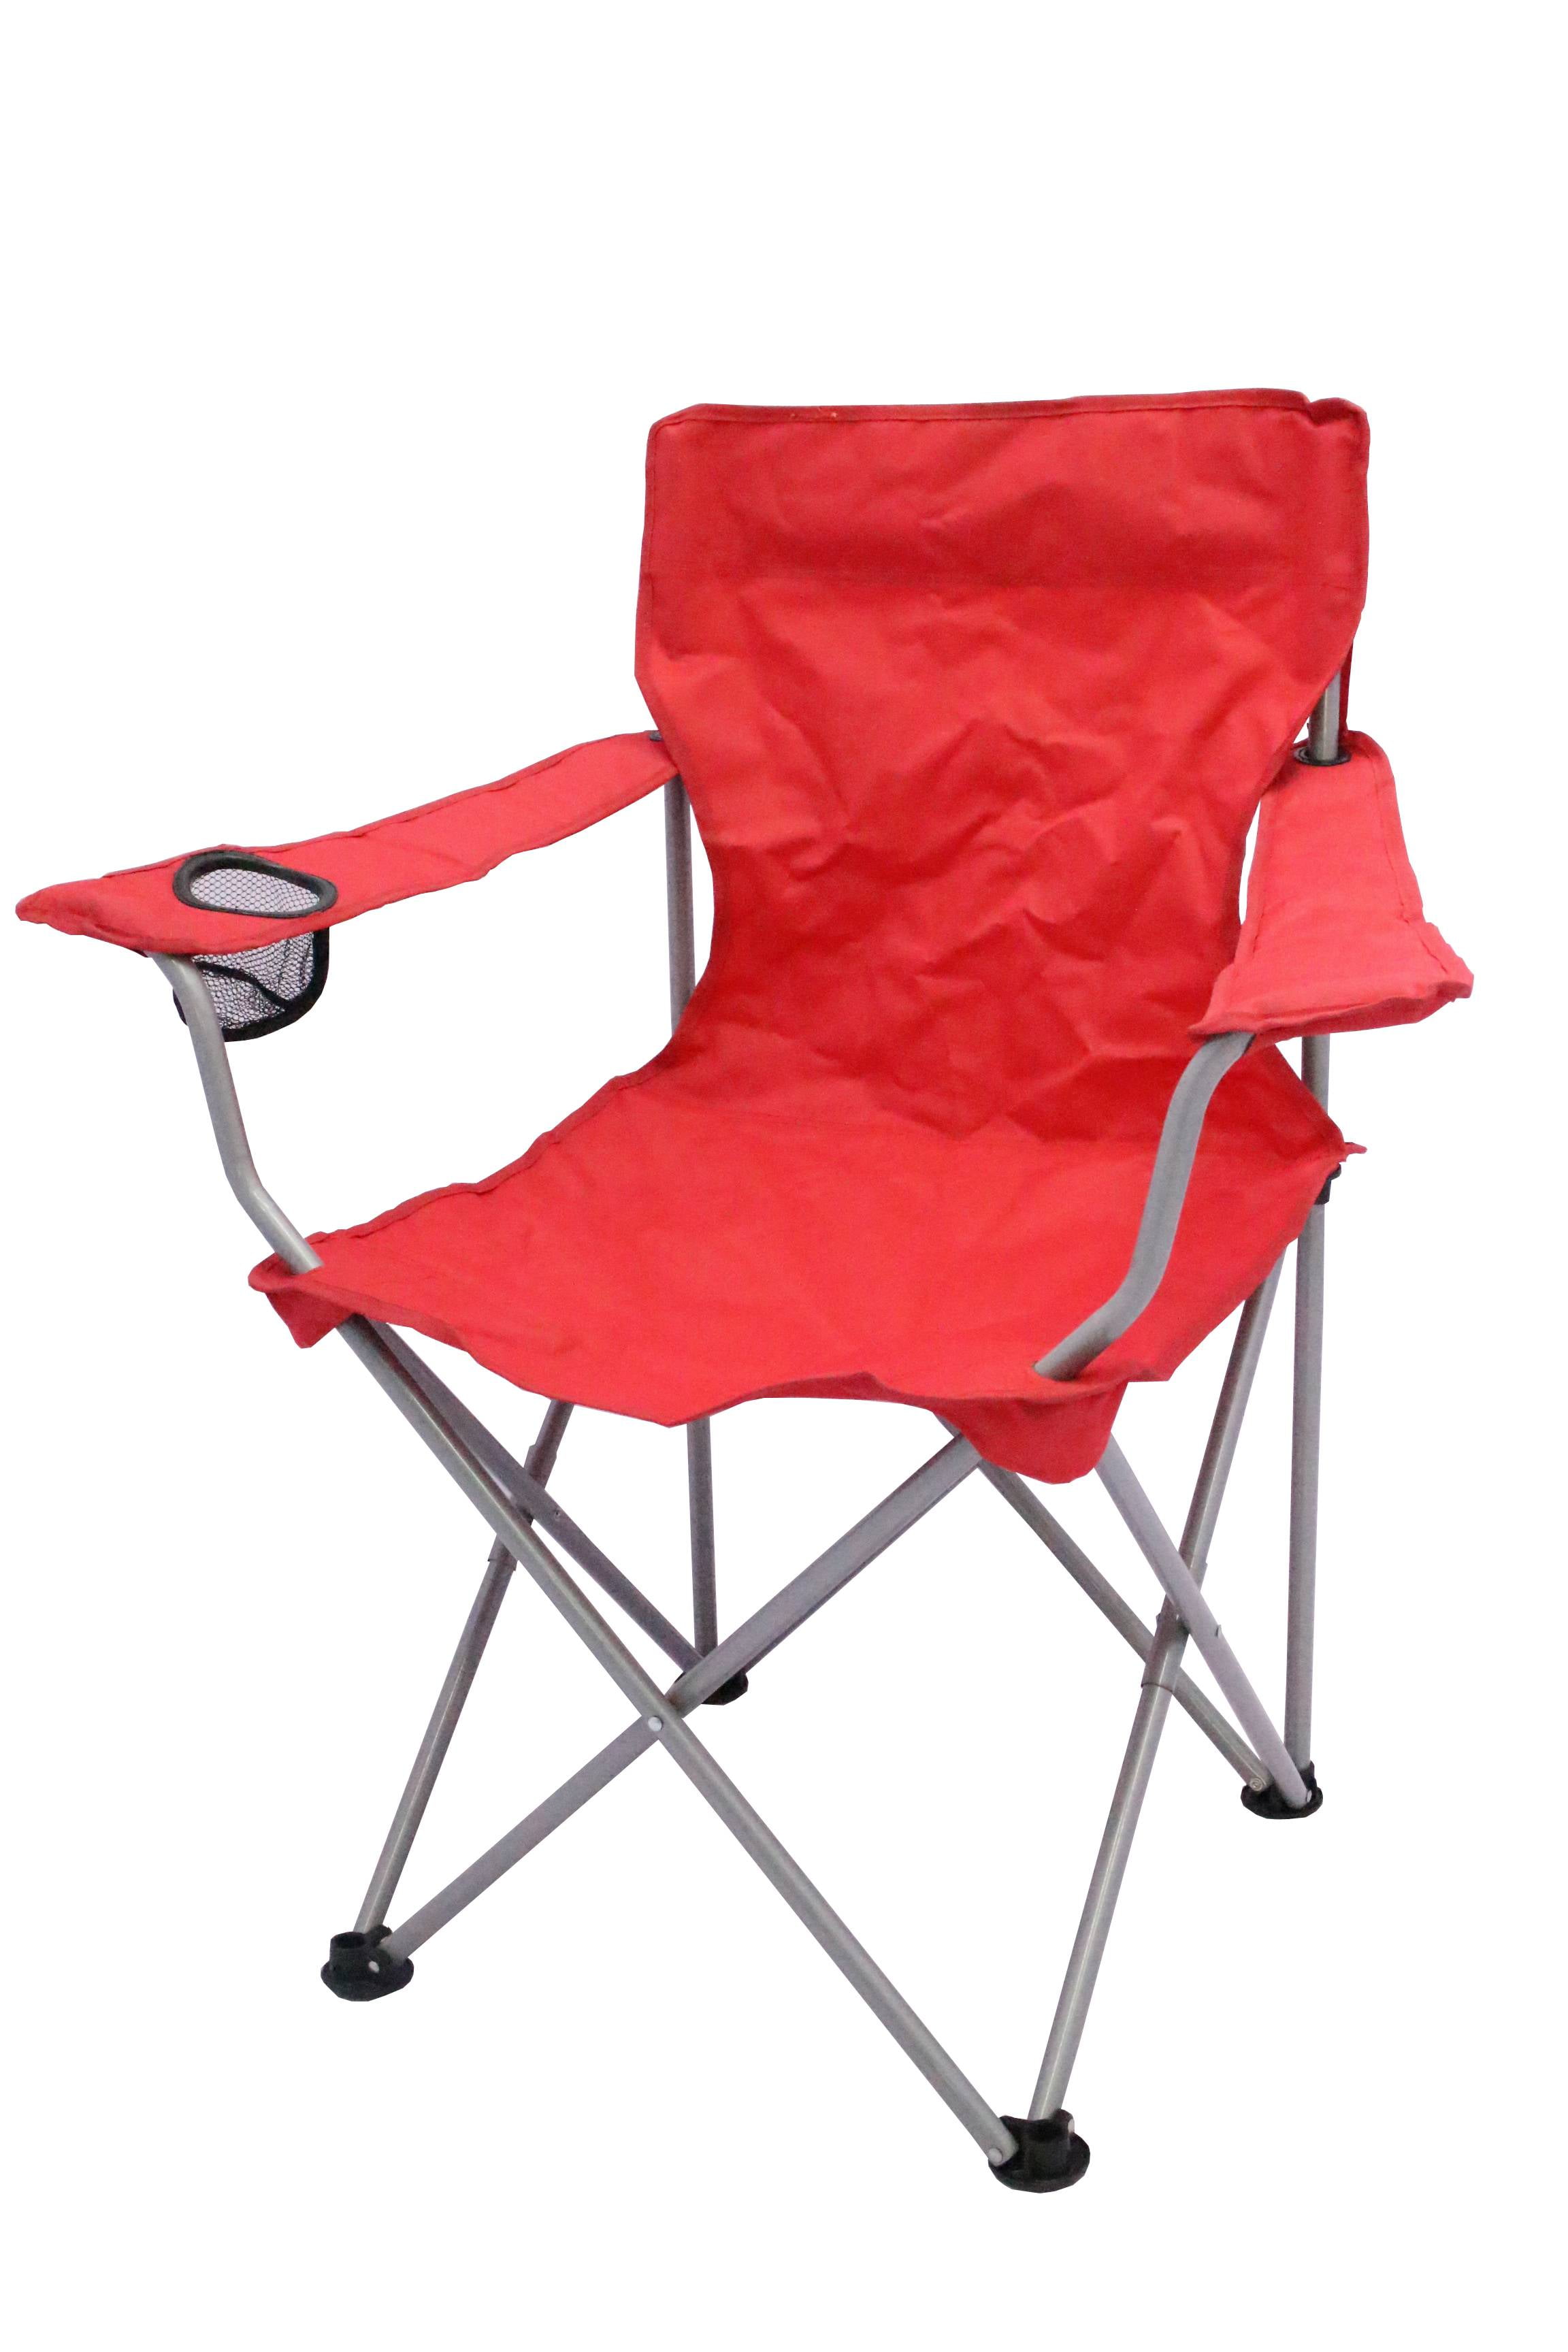 ozark trail basic comfort chair